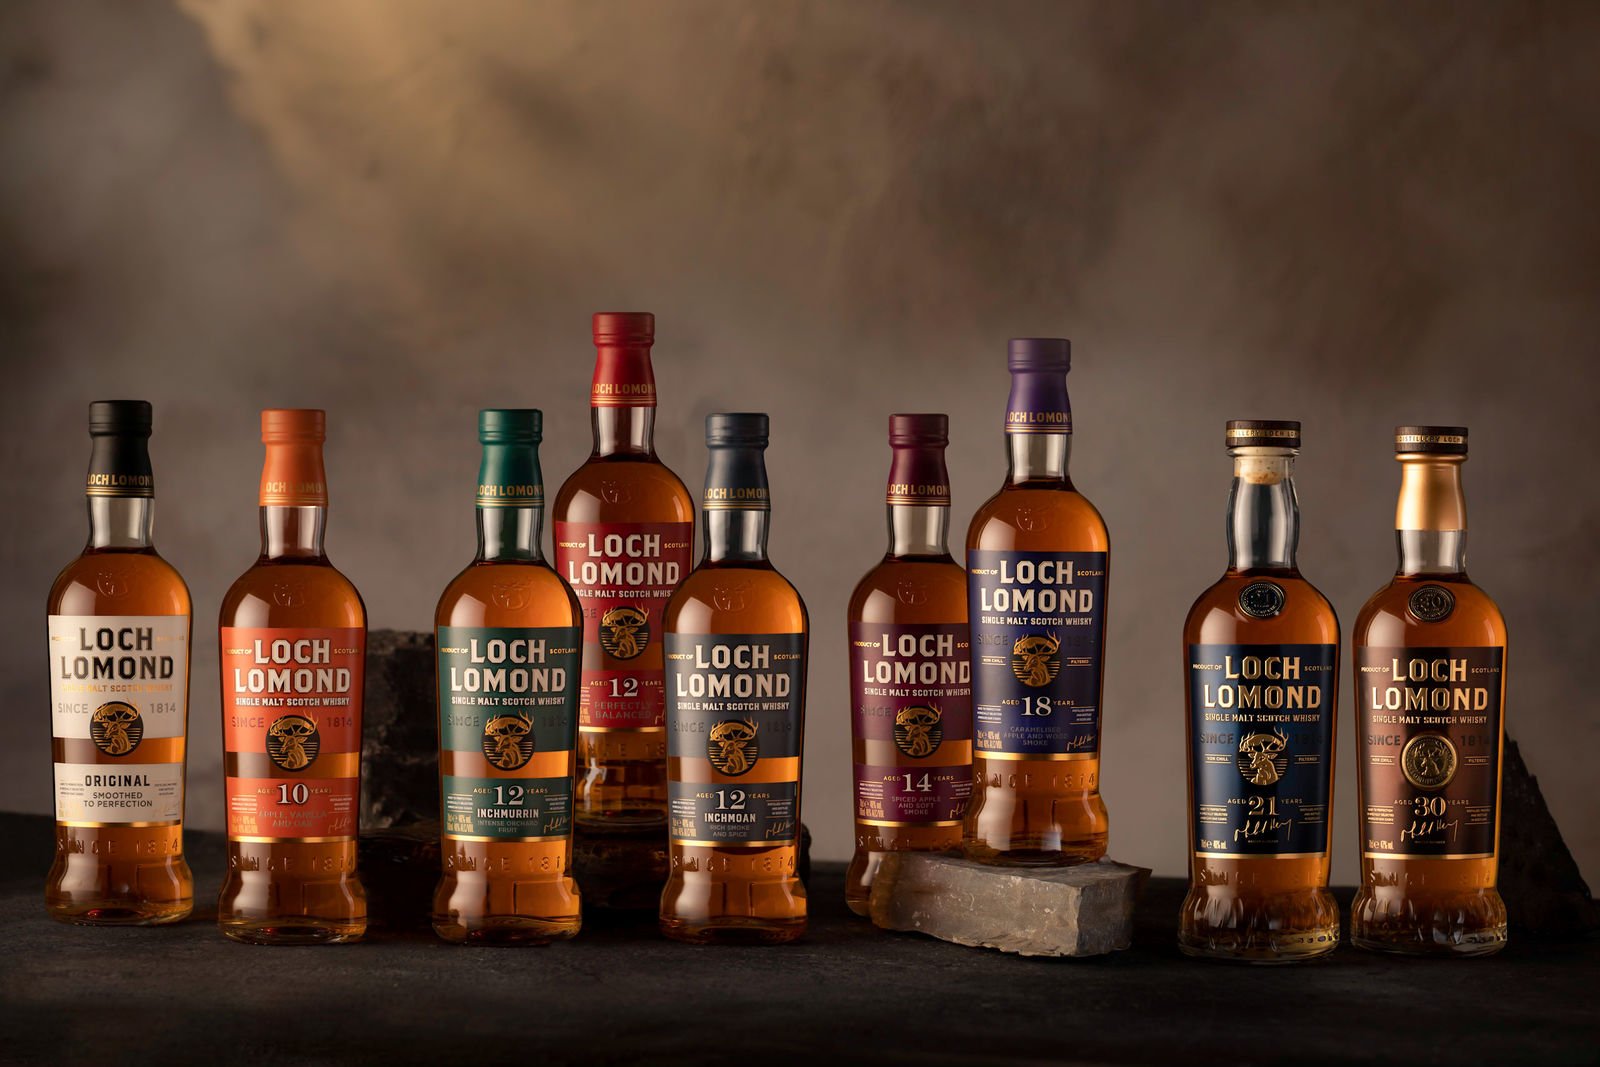 Loch Lomond Whiskies Unveils Striking New Packaging as it Accelerates International Growth - Loch Lomond Group